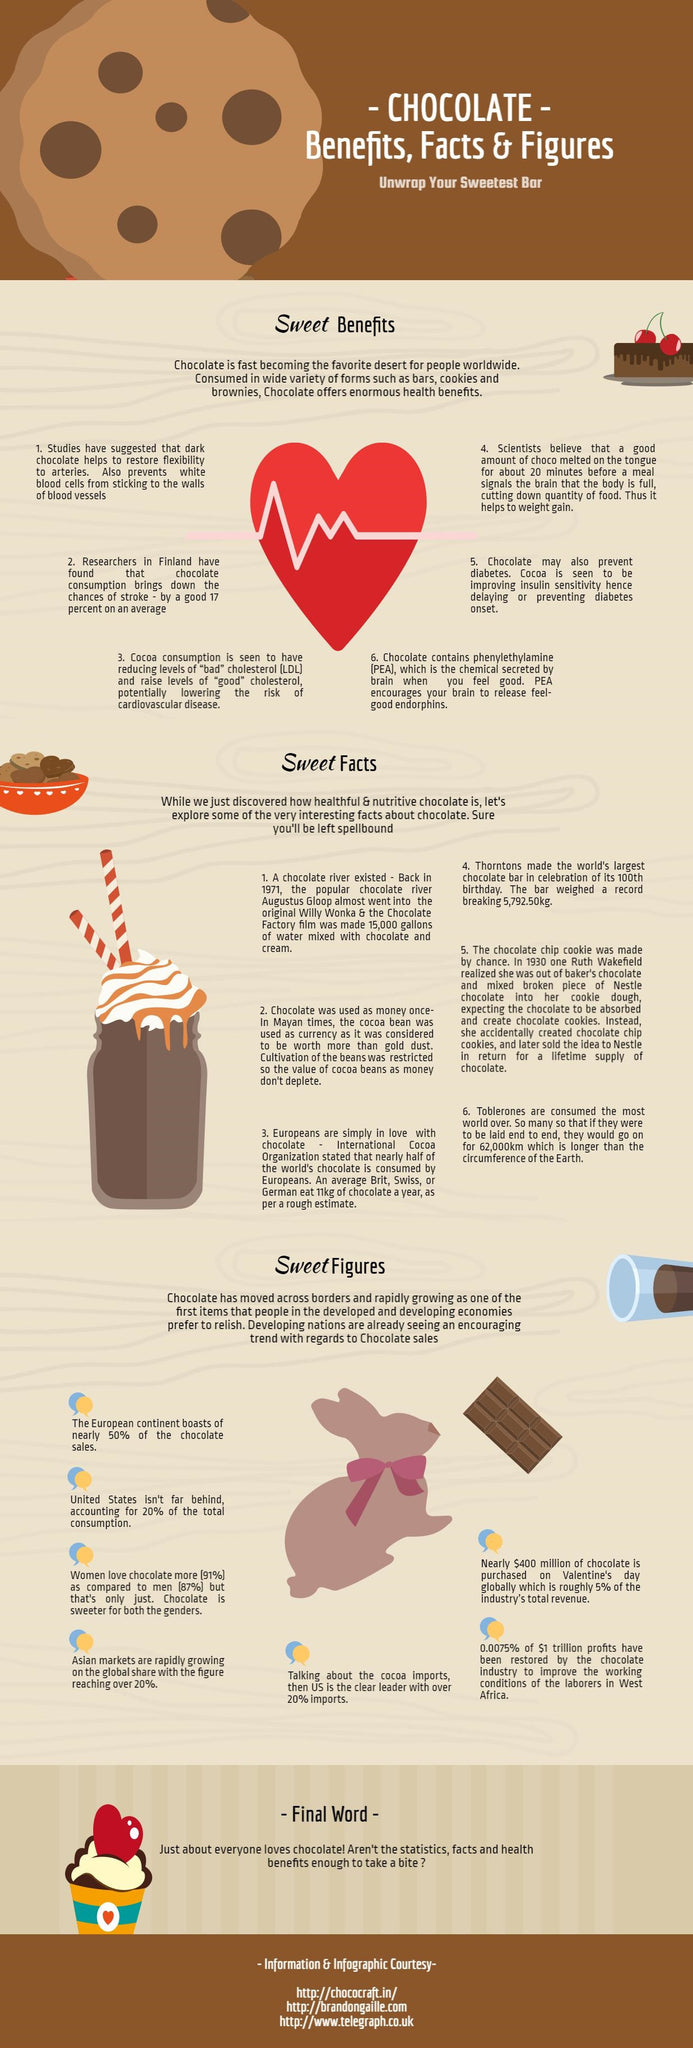 5 Health Benefits of Artisan Chocolate